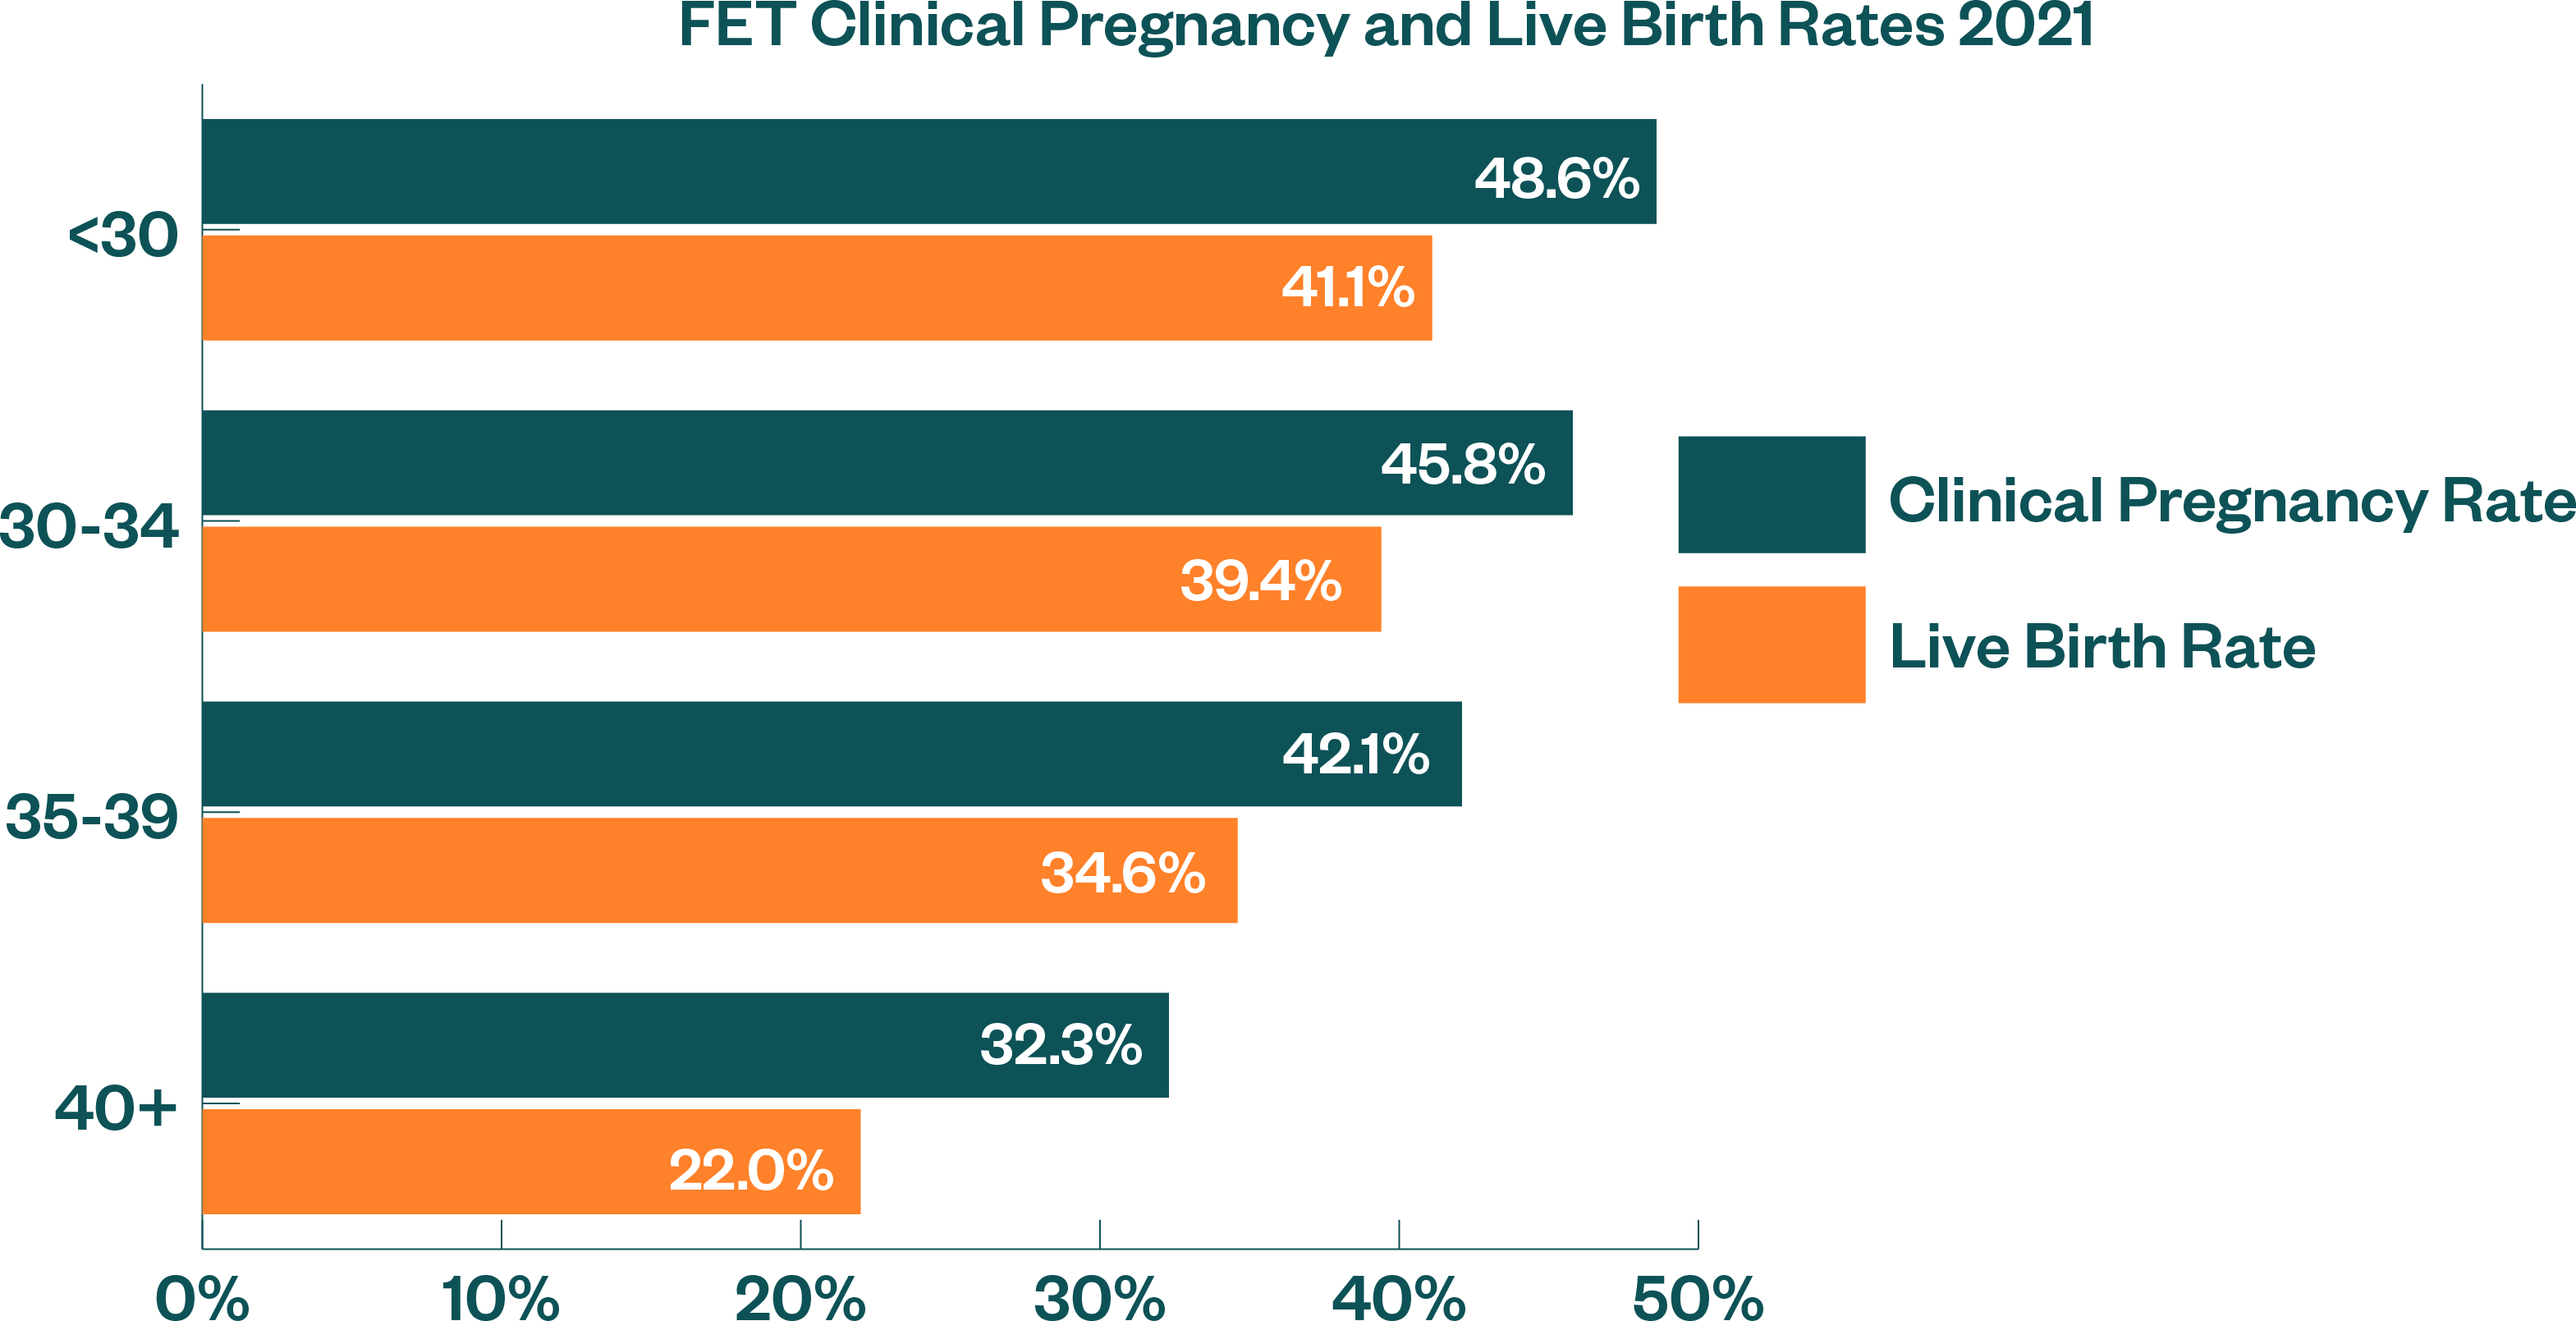 MI2417 Success Rates2021 V1 Clinical Pregnancy And Live Birth Rates FET 01